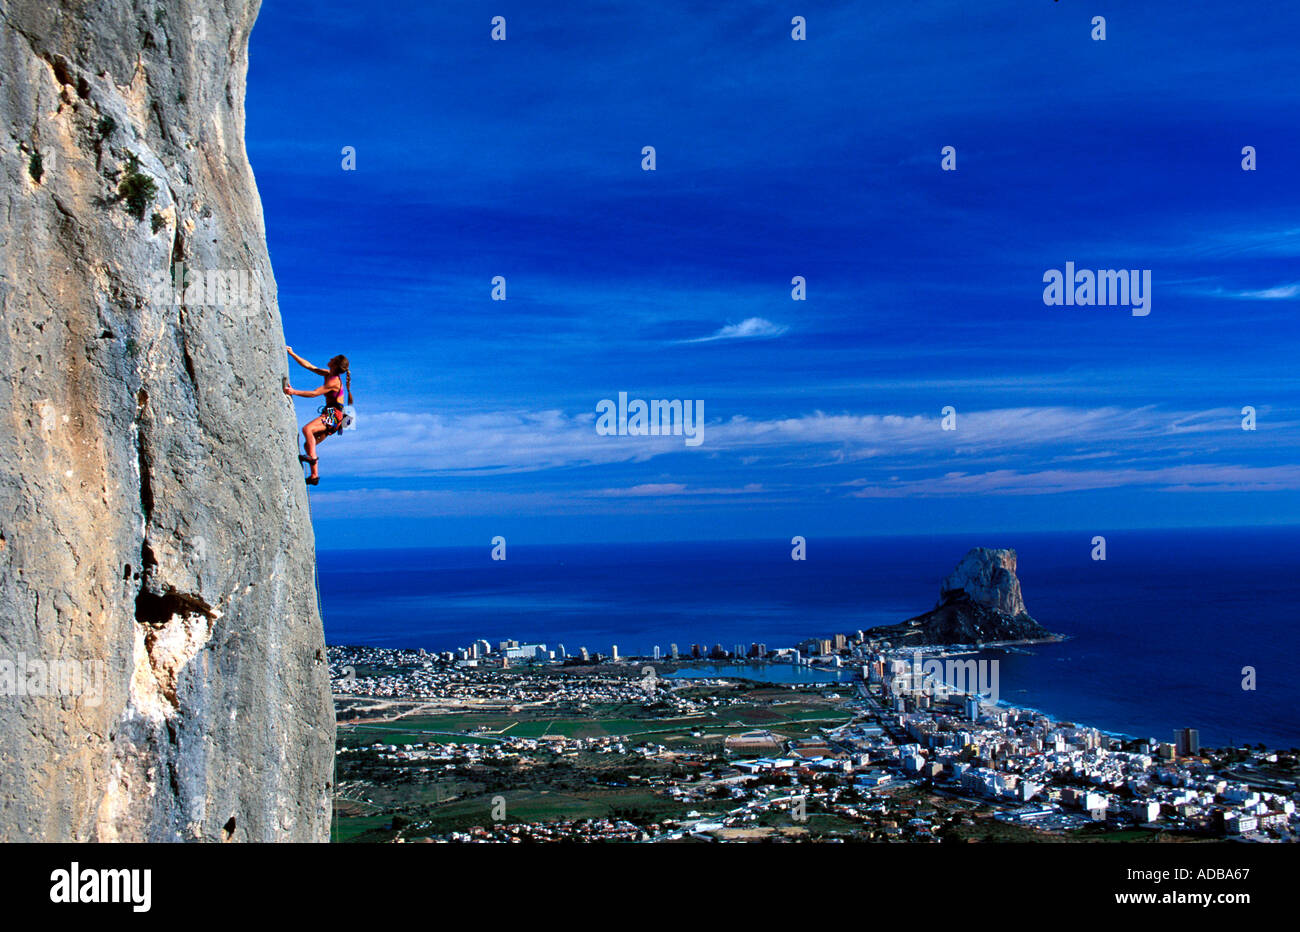 Emma Williams Klettern Tai Chi F6b Olta Costa Blanca Spain Stockfoto